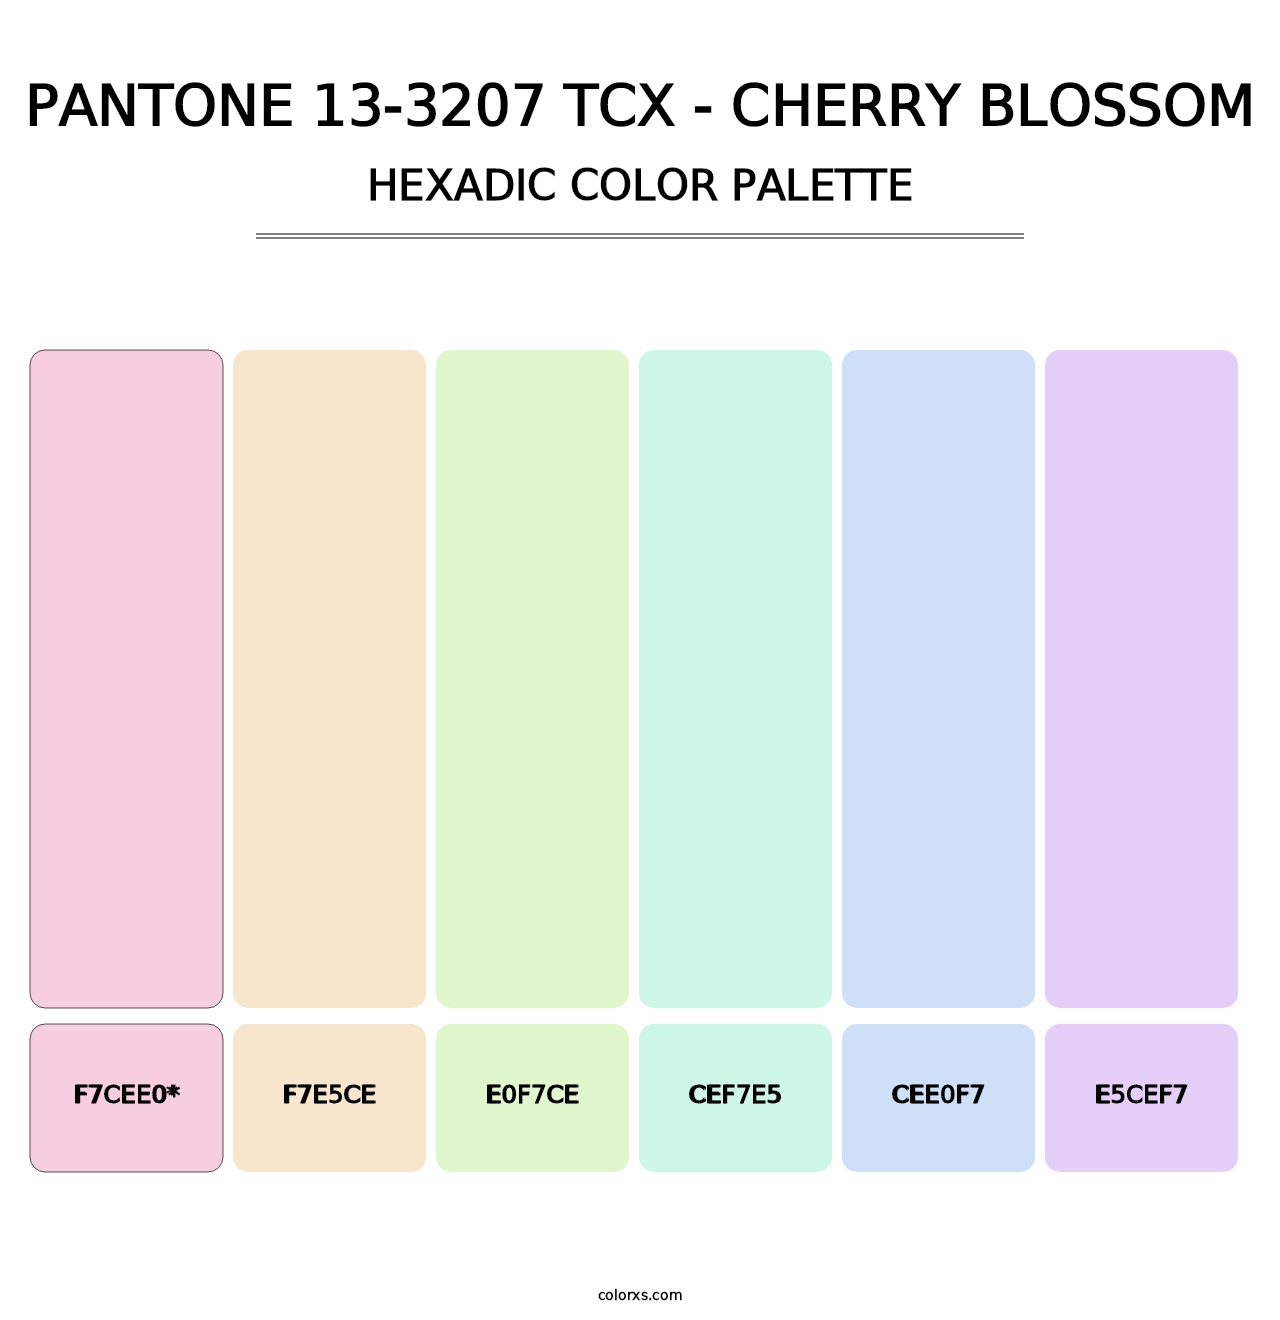 PANTONE 13-3207 TCX - Cherry Blossom - Hexadic Color Palette